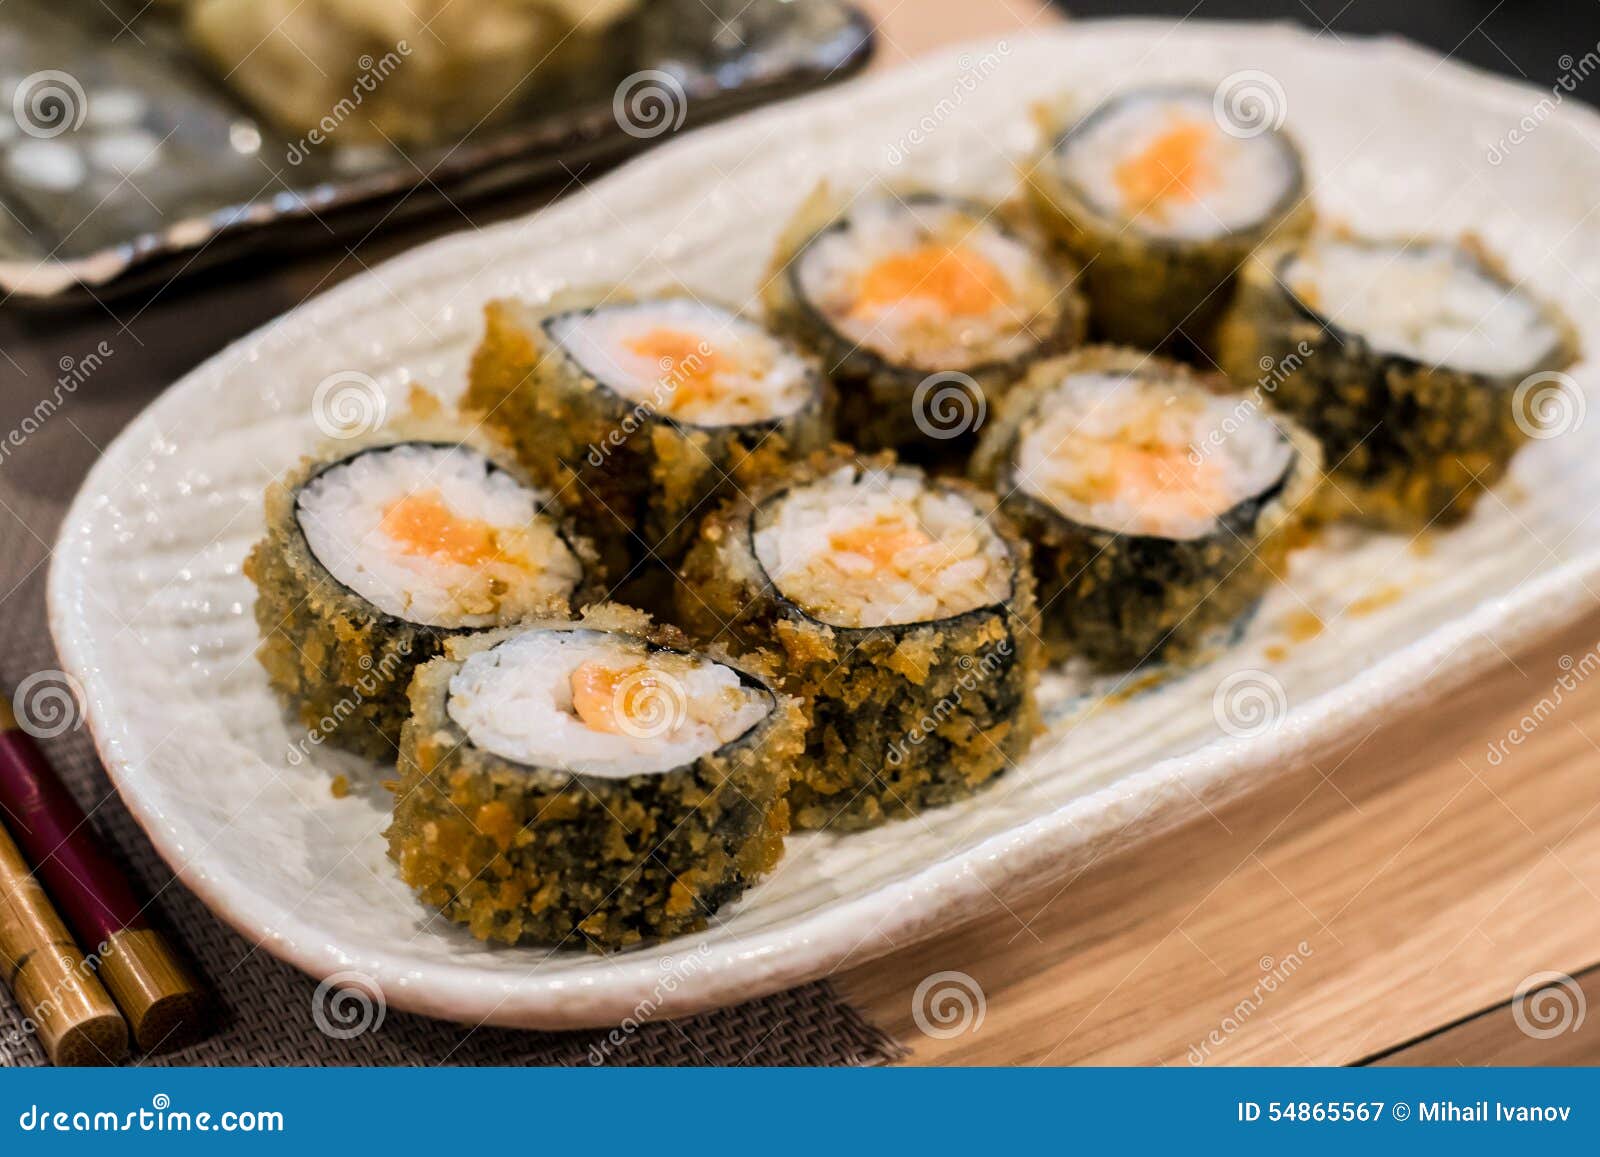 fried hossomaki sushi rolls with fresh raw salmon and white rice